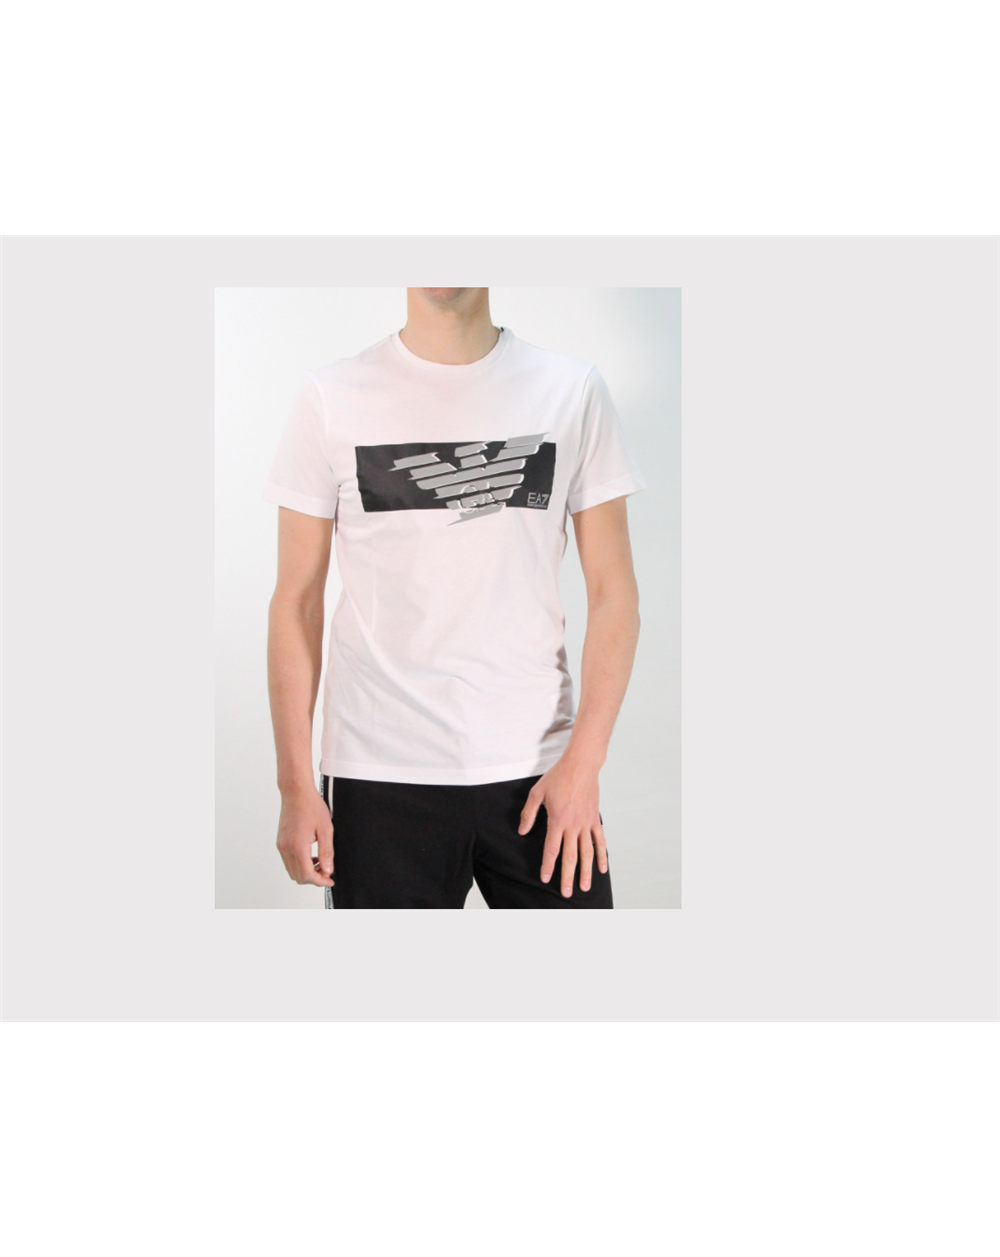 EA7 t-shirt uomo ARMANI bianca 100% cotone con logo aquila grigia